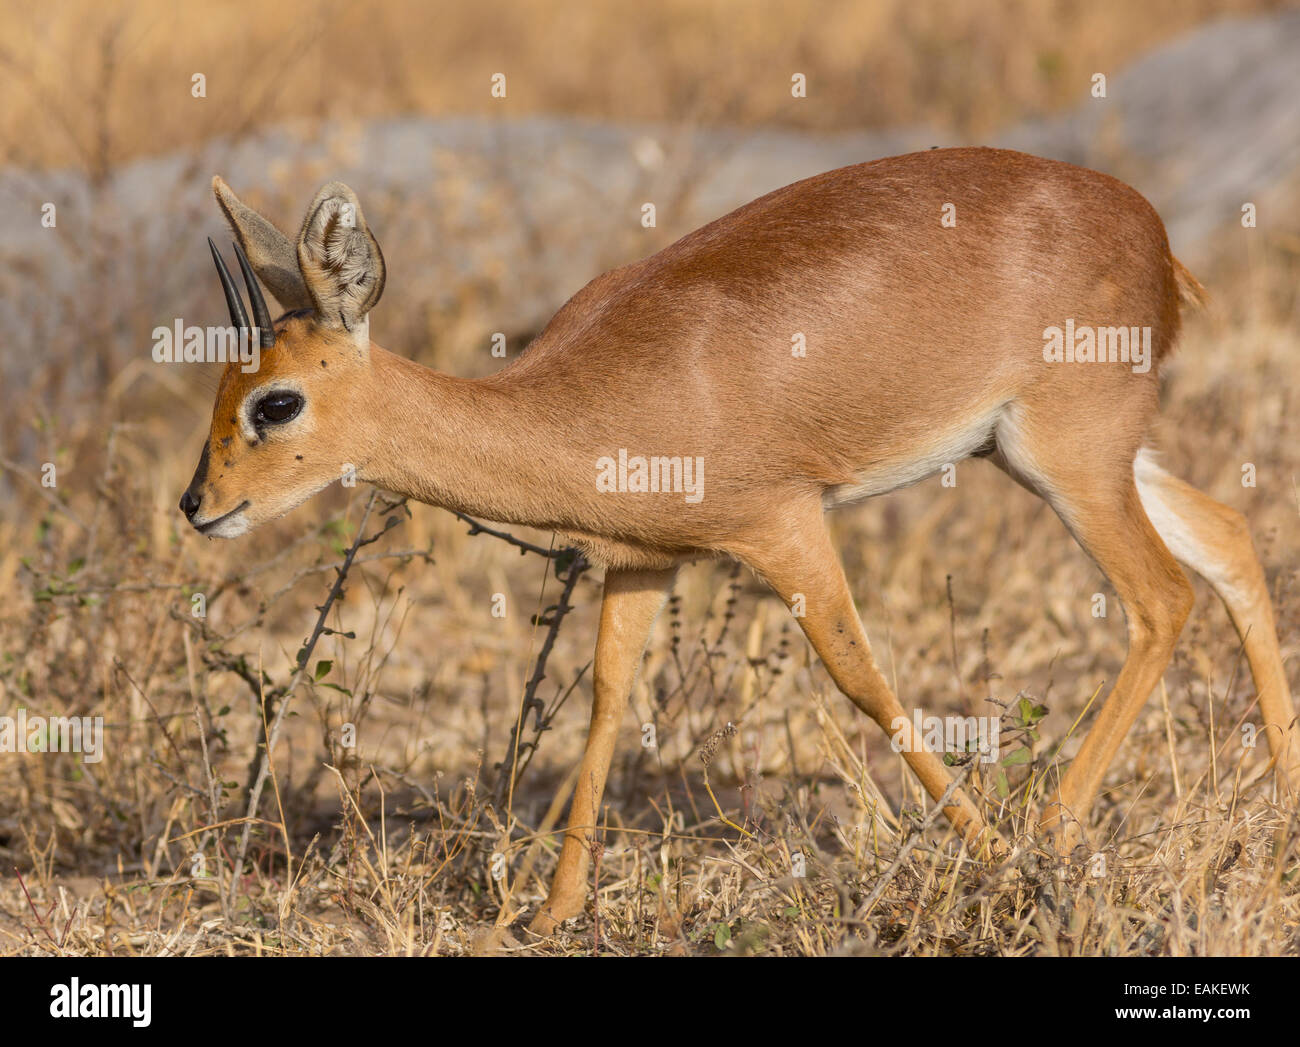 Parco Nazionale di Kruger, SUD AFRICA - Steenbok, una piccola antilope. Raphicerus campestris Foto Stock